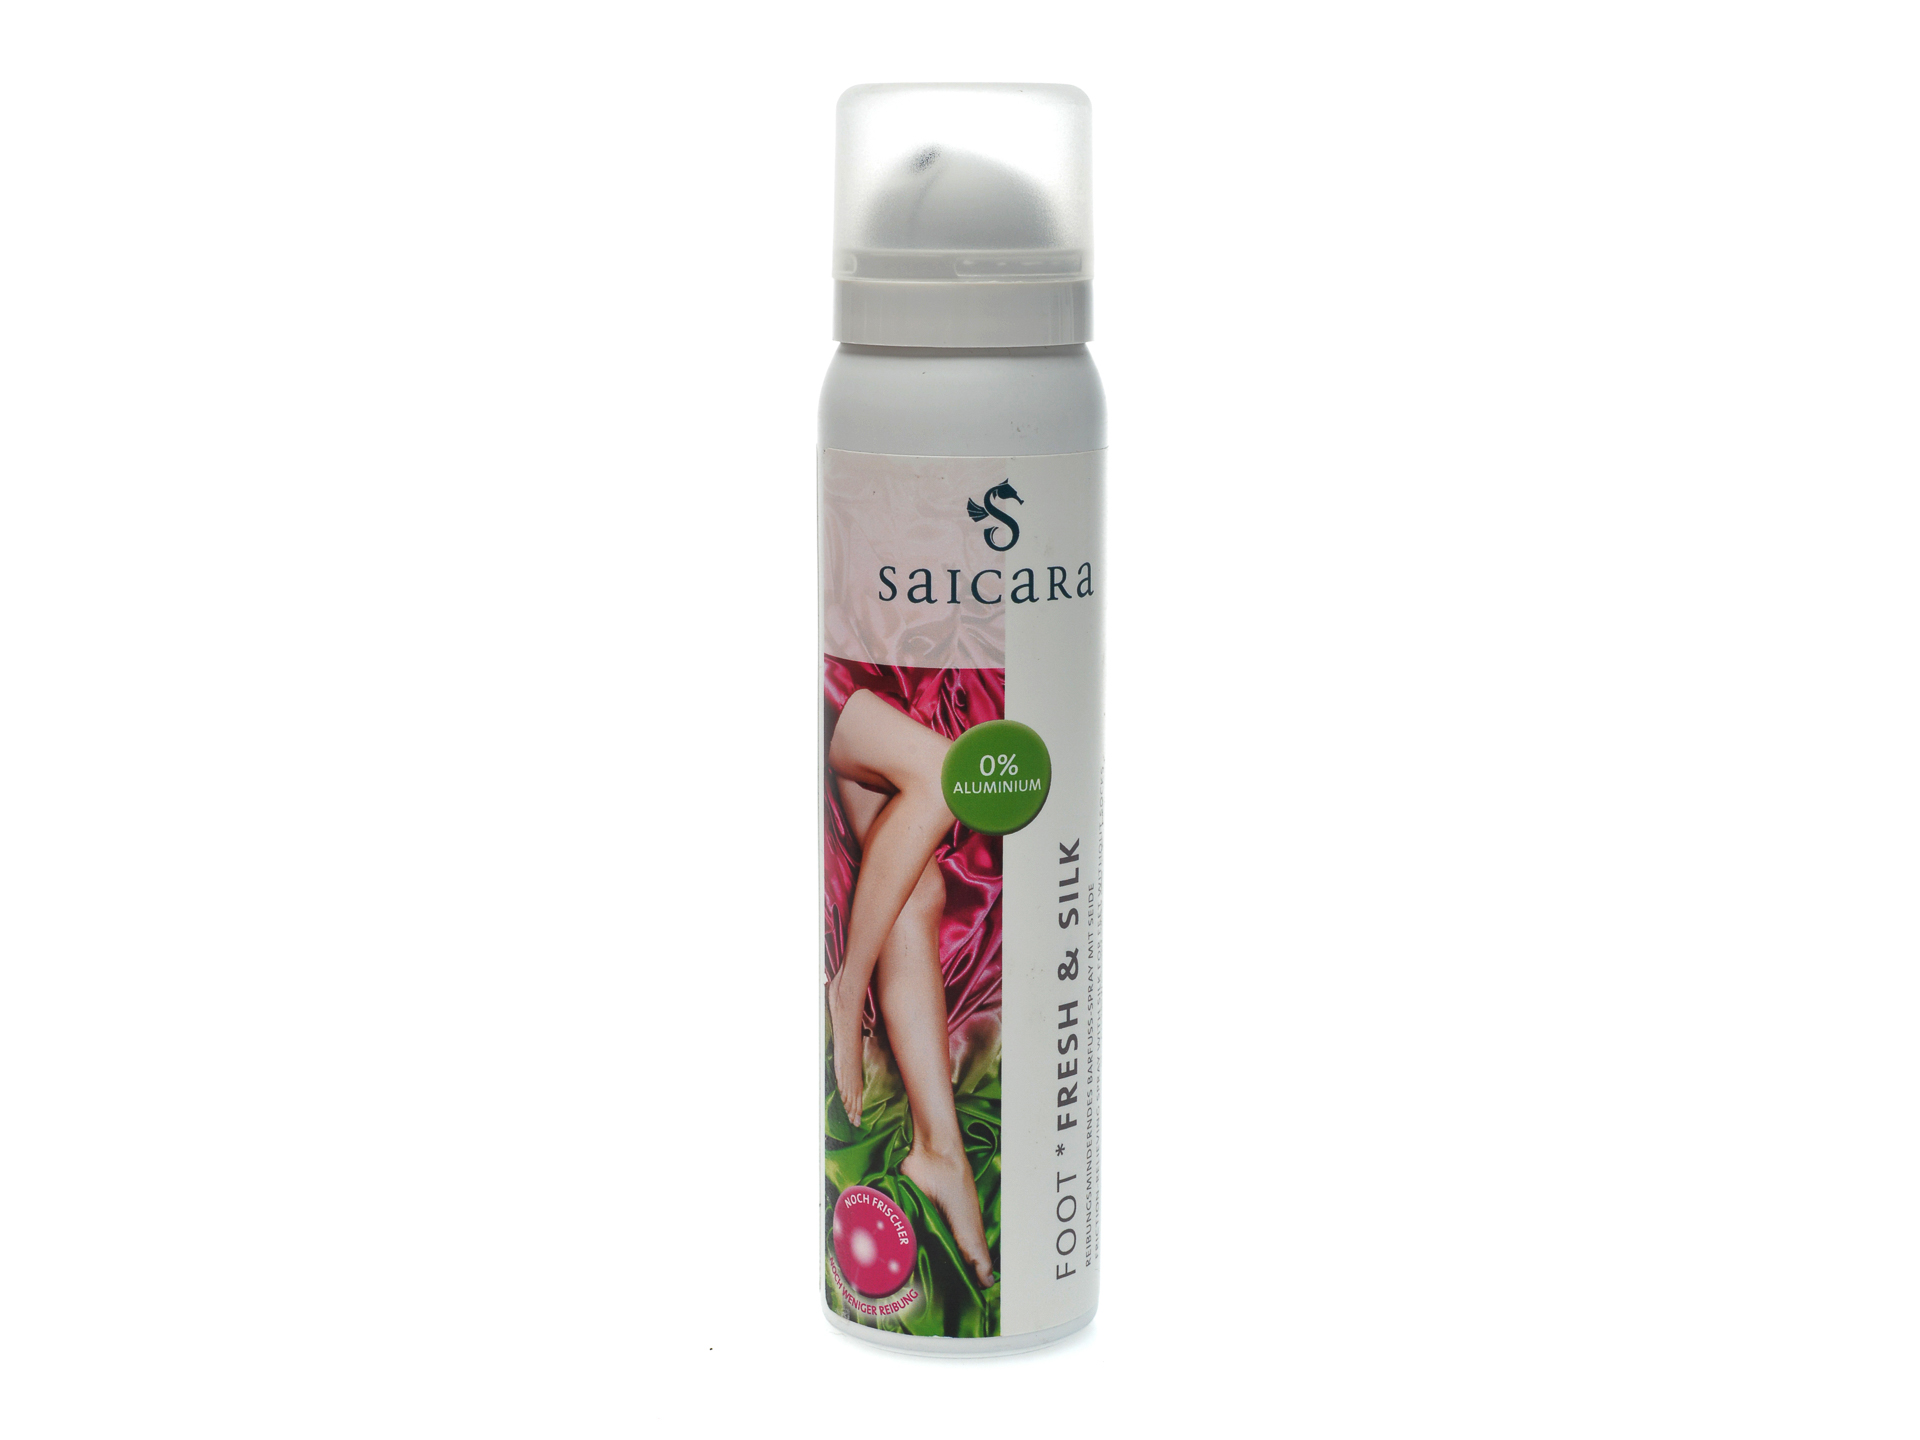 Spray-deodorant pentru picioare, Solitaire otter.ro poza reduceri 2021